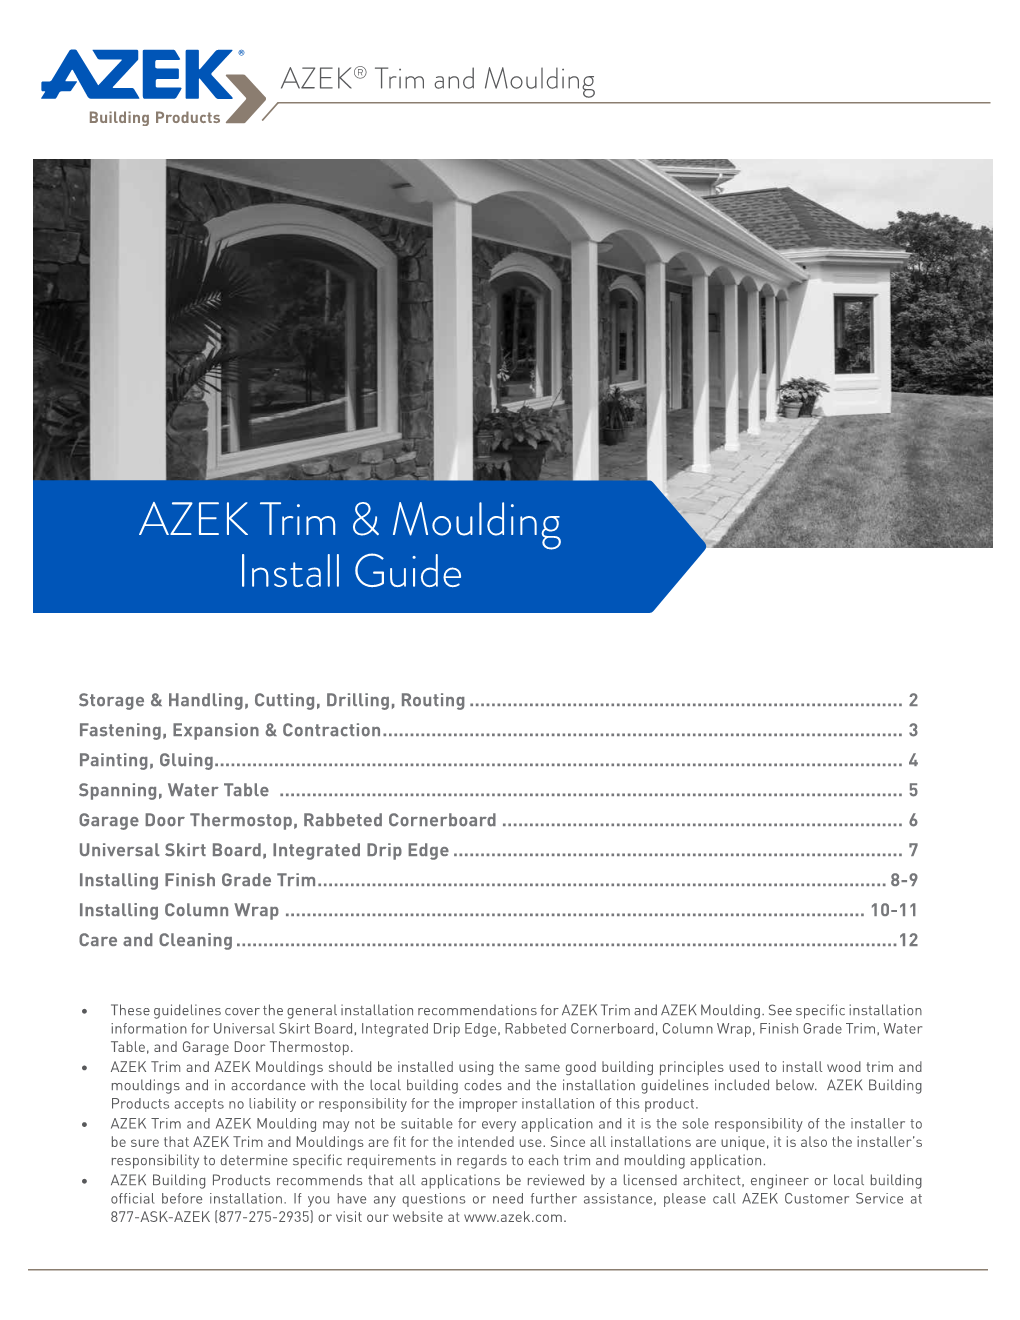 AZEK Trim & Moulding Install Guide